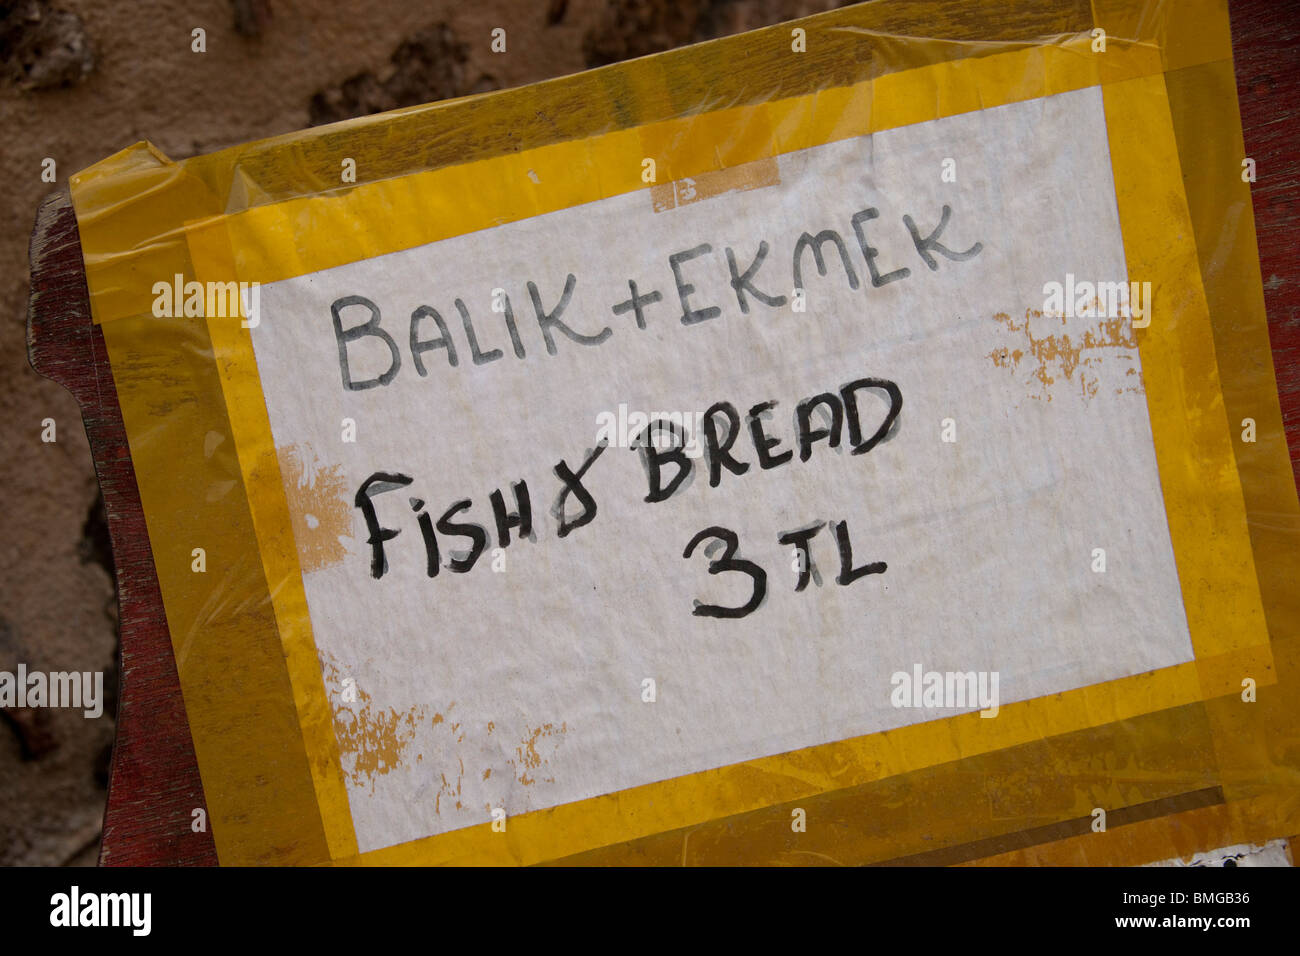 La Turchia Antalya - Balik+Ekmek, pesce e pane per 3TL nella città vecchia cafe - 2010 - circa 2 dollari US o 1,50 Sterline o Euro Foto Stock